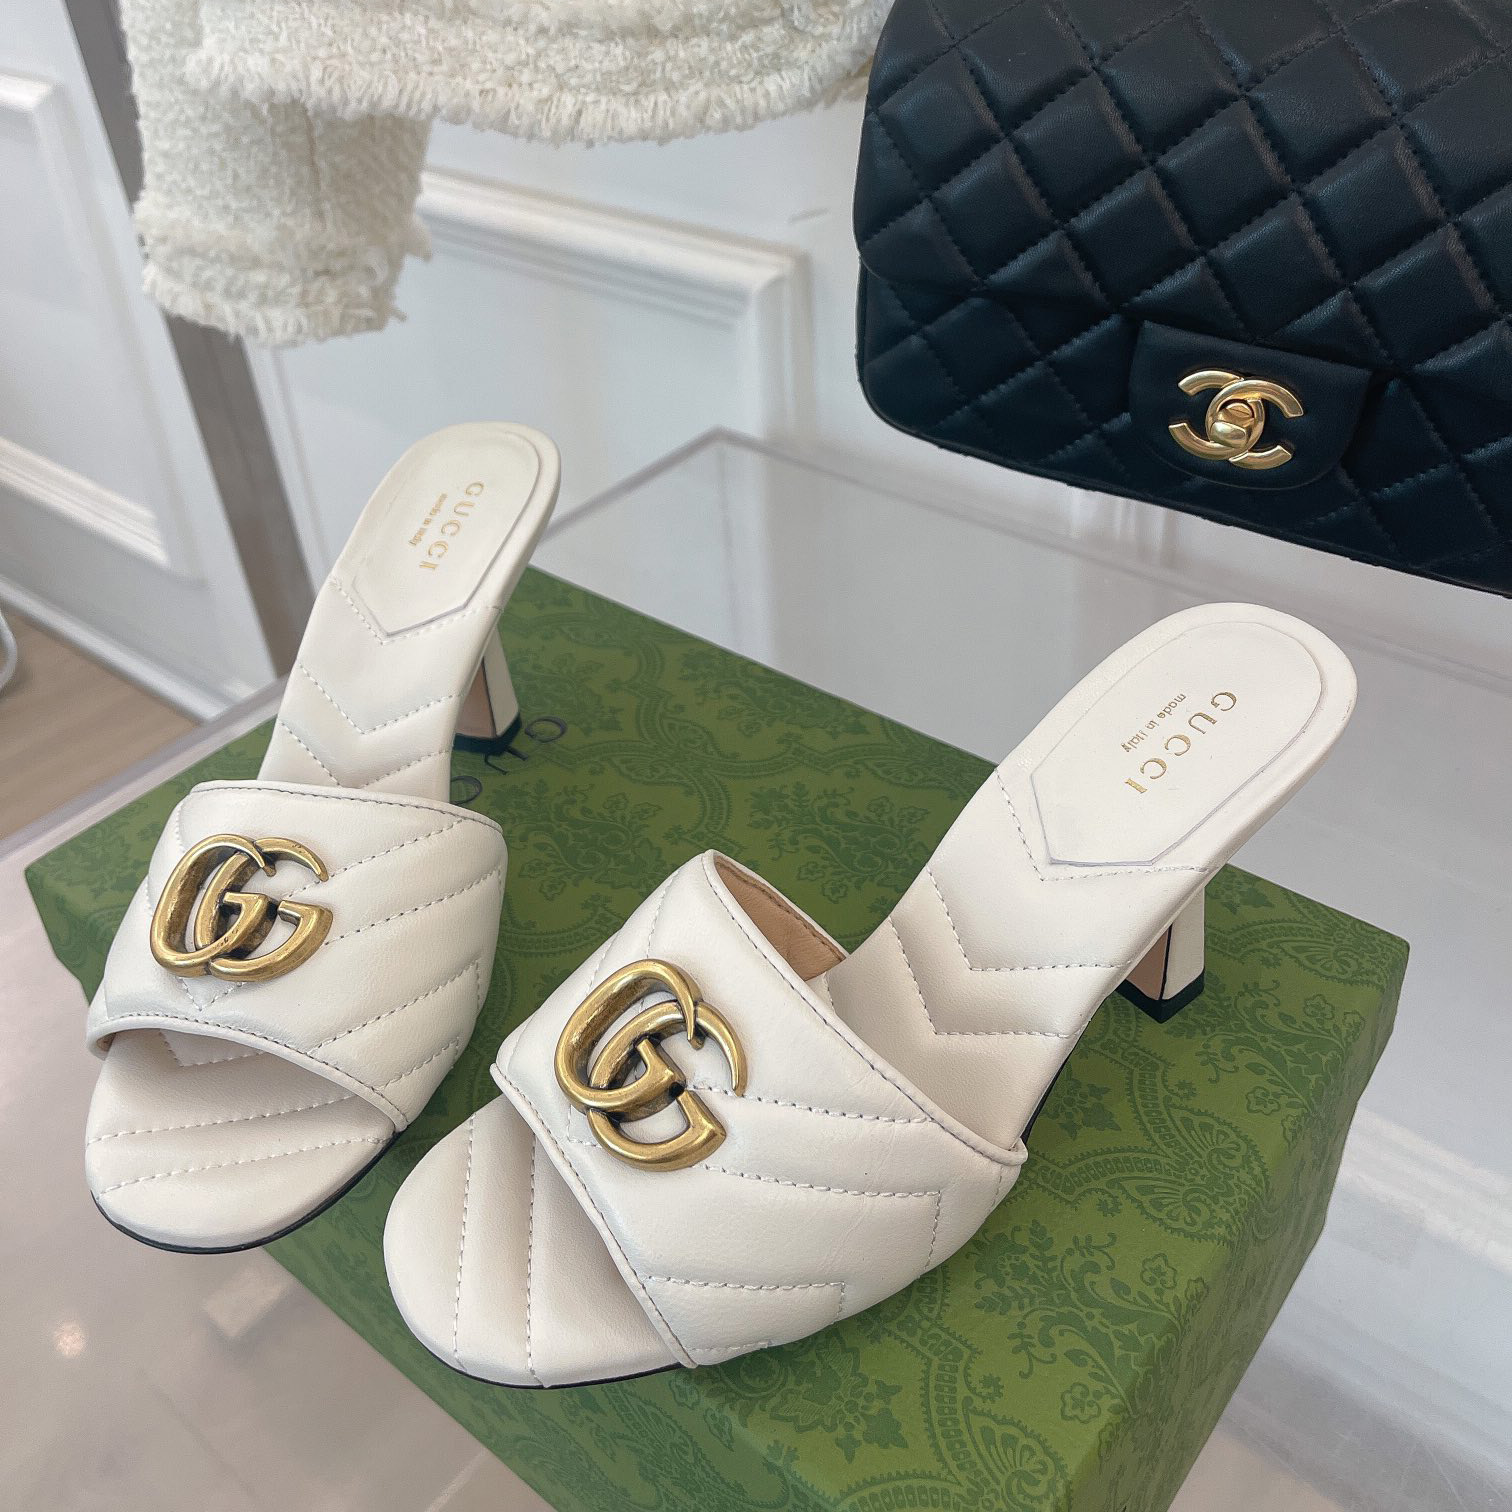 Gucci Women's Double G Slide Sandal With Heel Height Of 7.5cm - DesignerGu